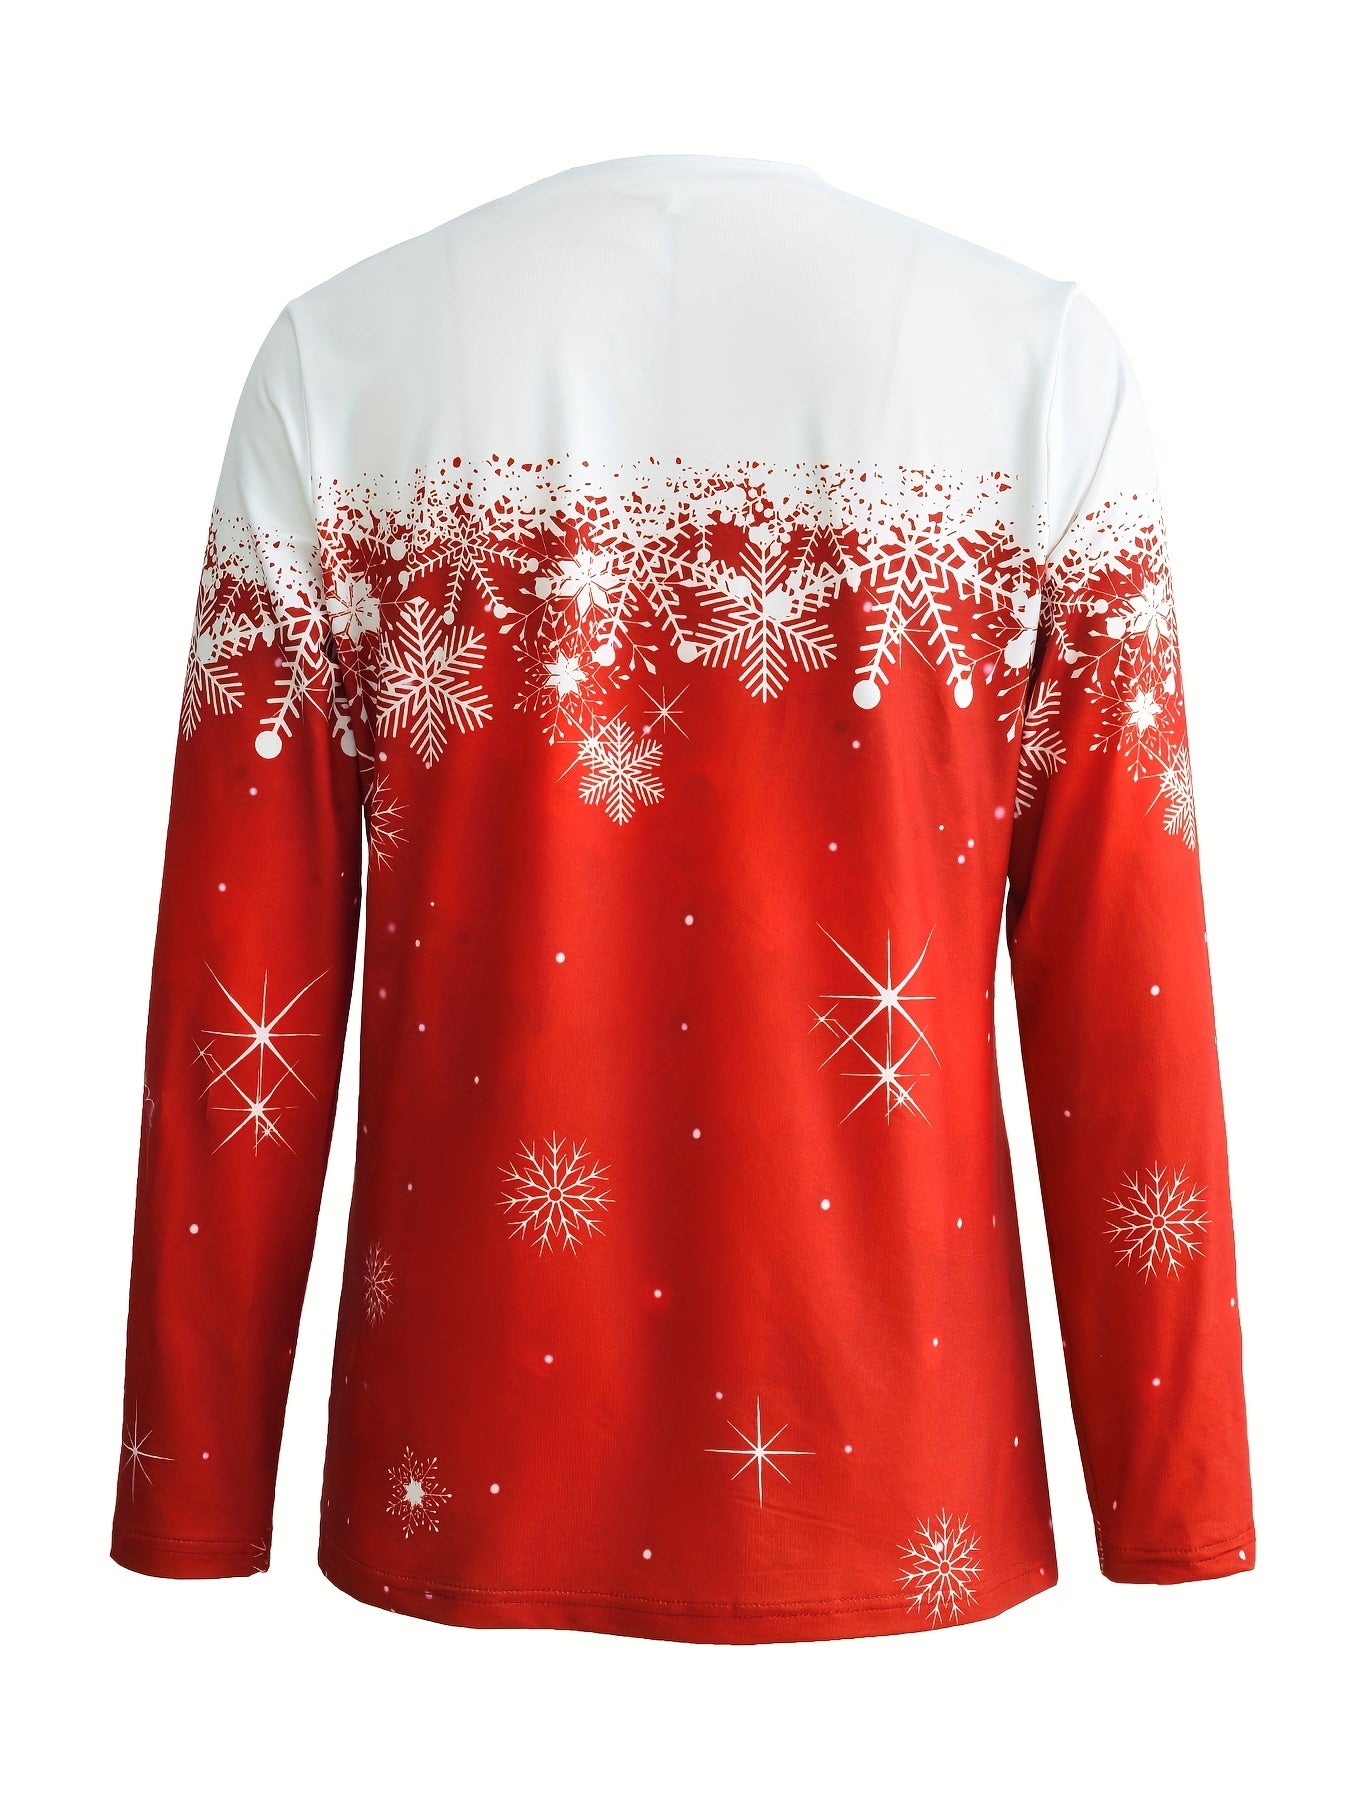 Christmas Cartoon Character Print Sweatshirt, Casual Long Sleeve Crew Neck Sweatshirt For Fall & Winter, Women's Clothing